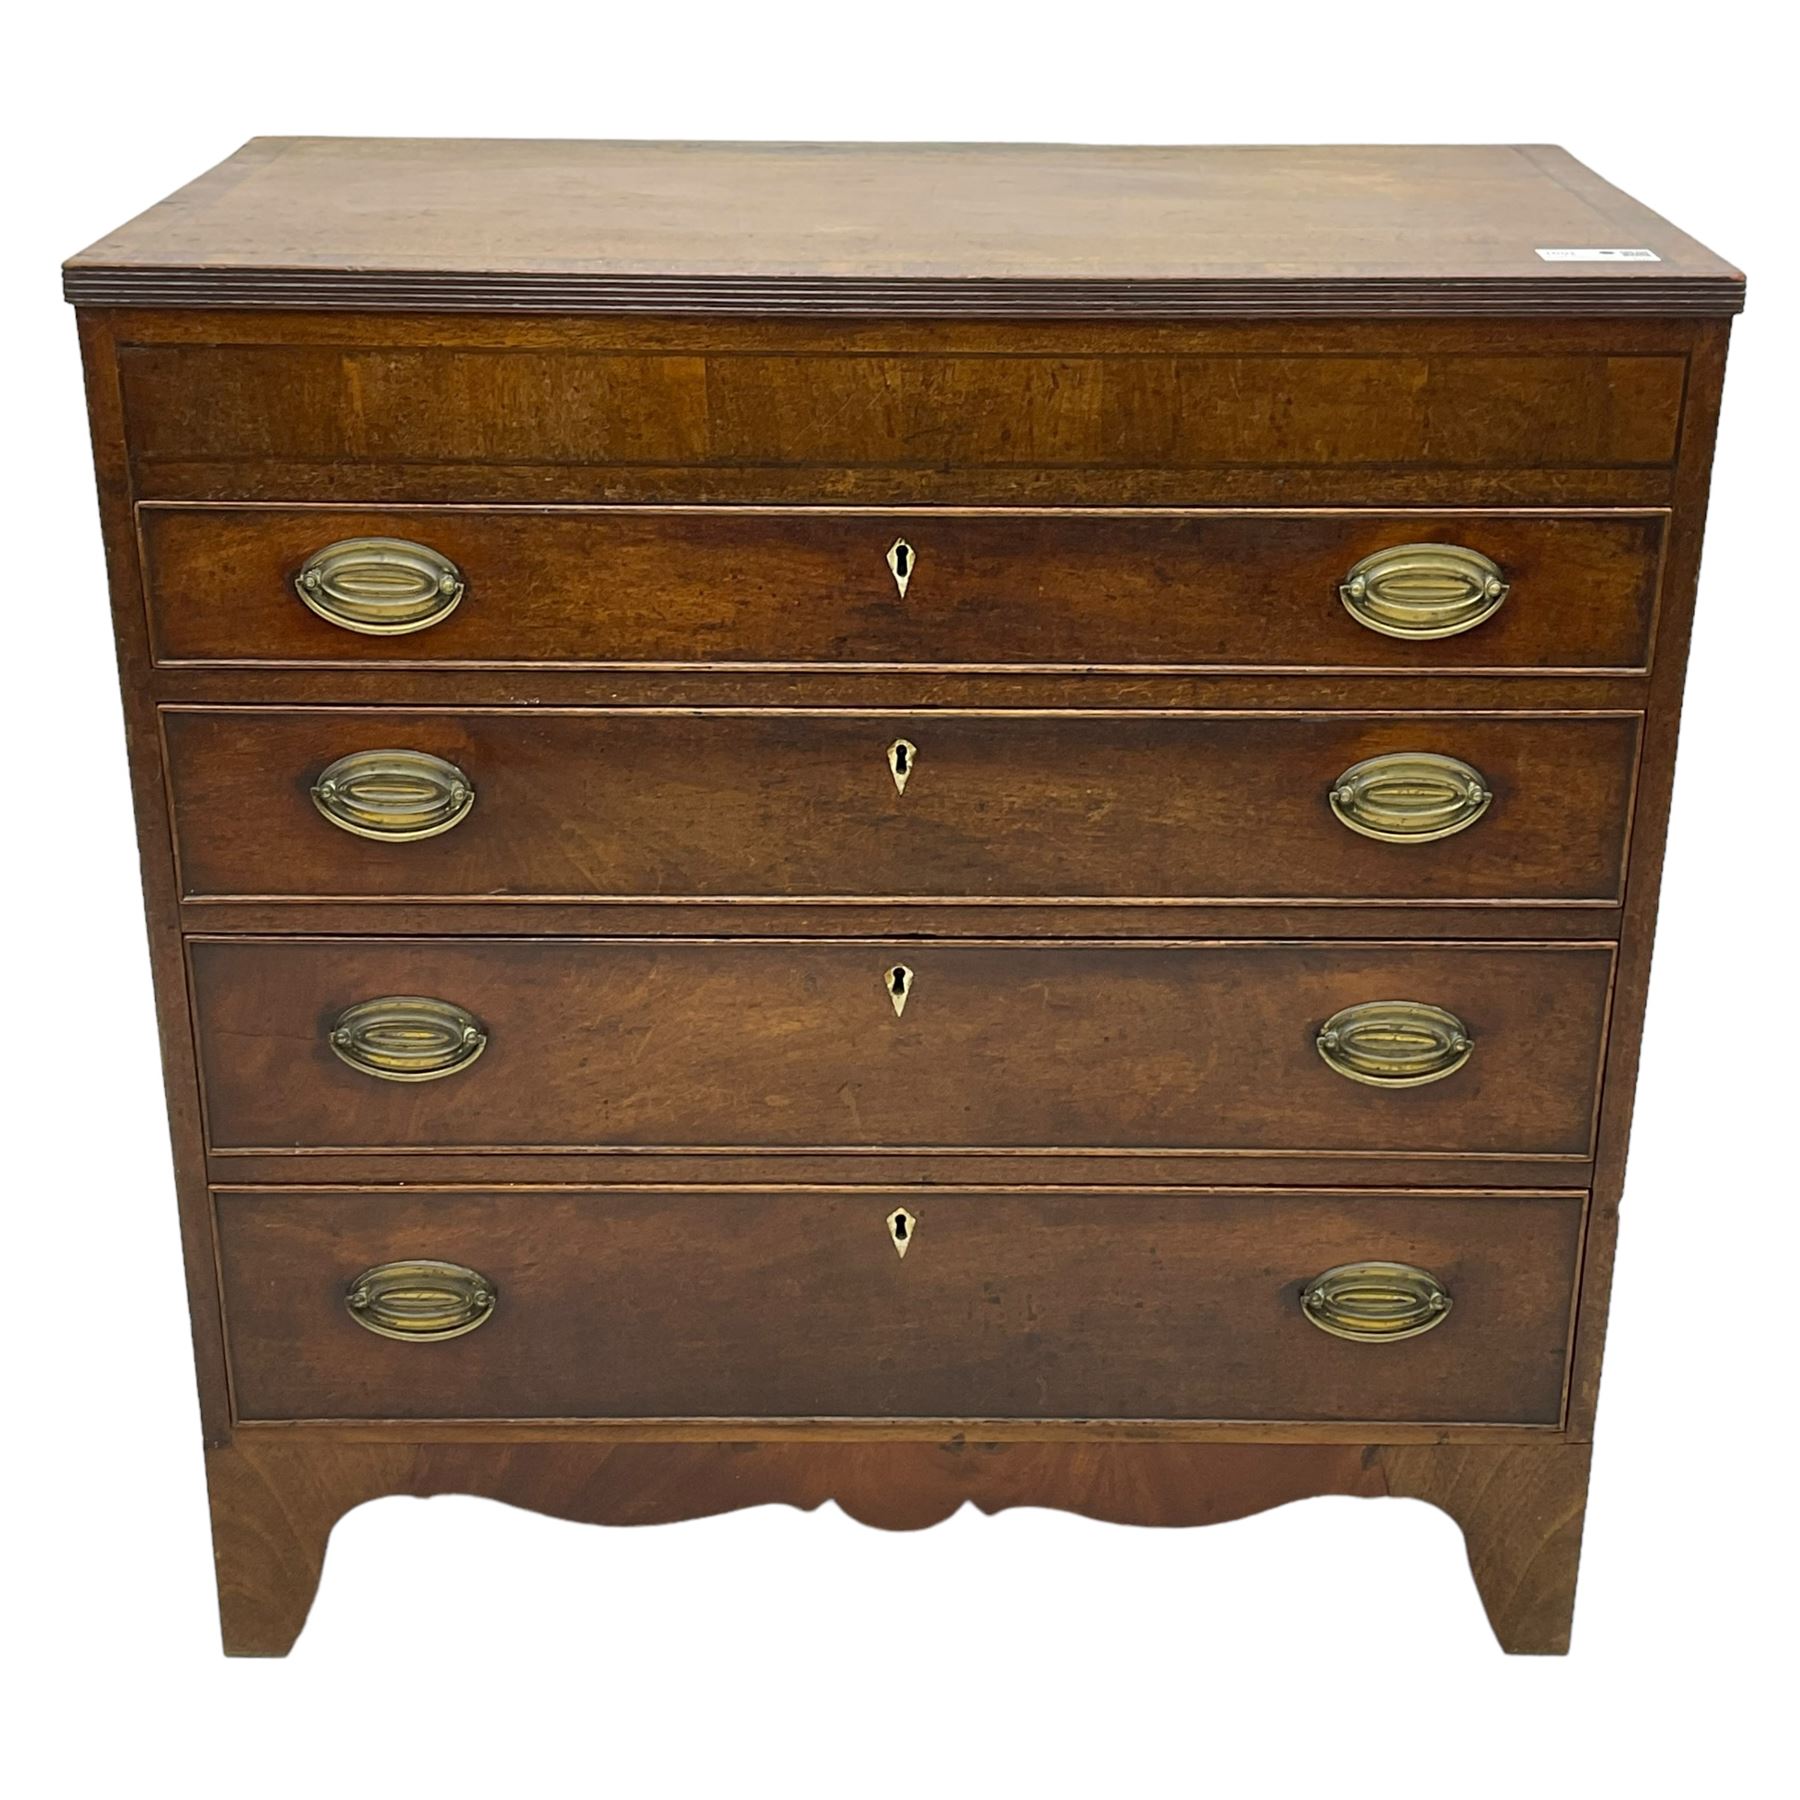 George III mahogany chest - Image 6 of 7